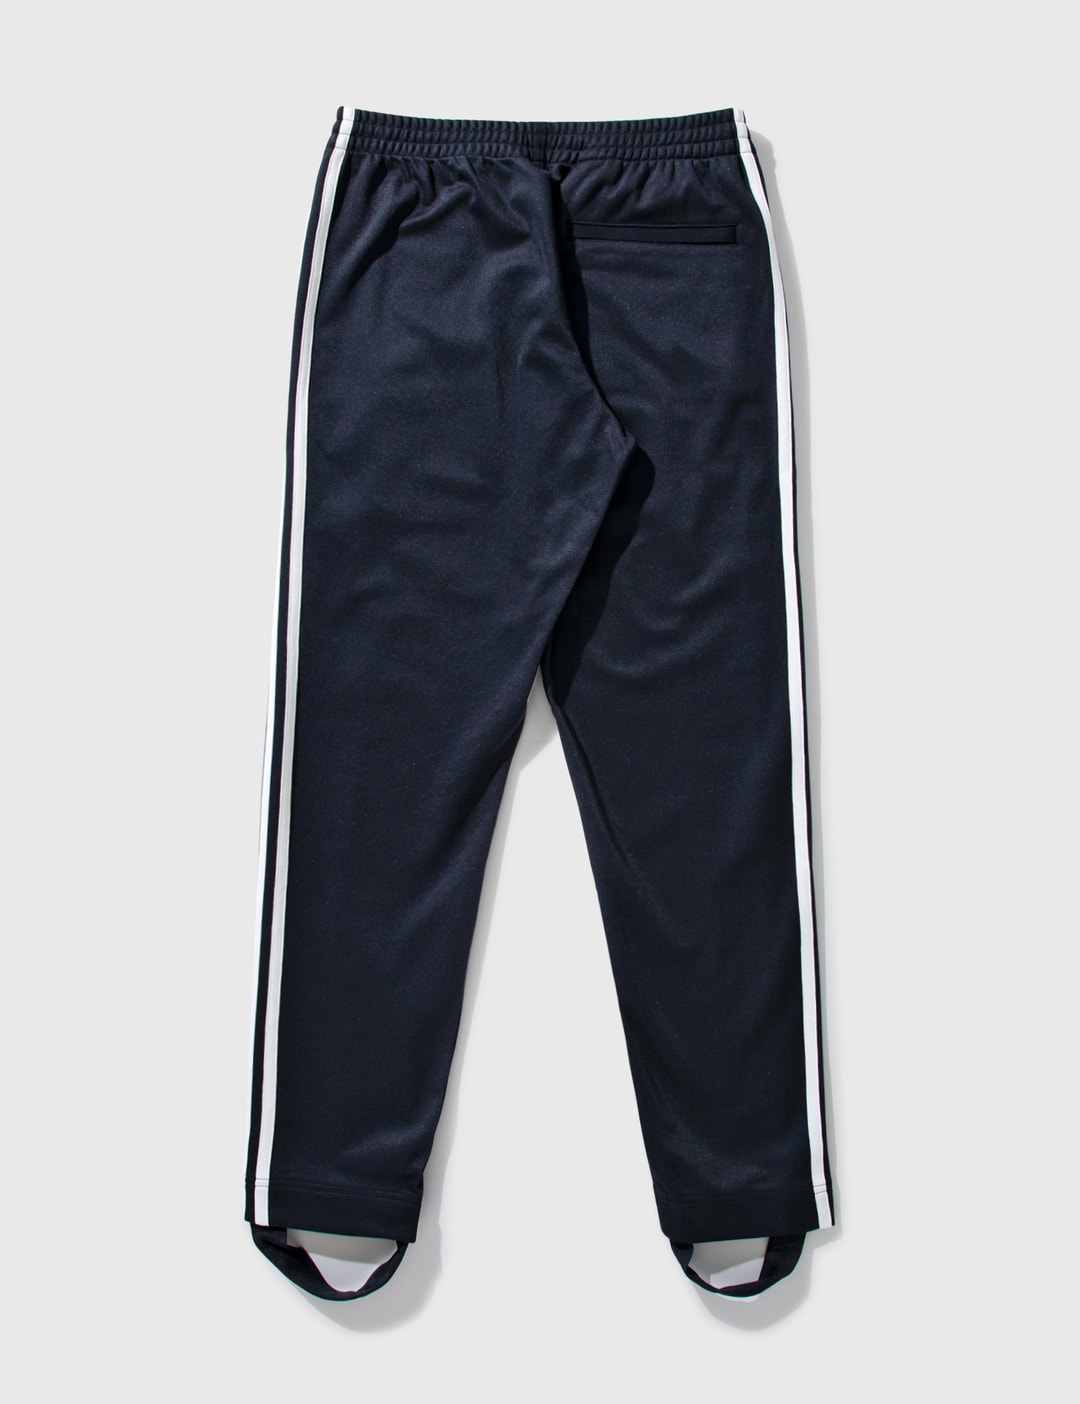 Adidas Originals - Adidas Originals x Noah Beckenbauer Track Pants ...